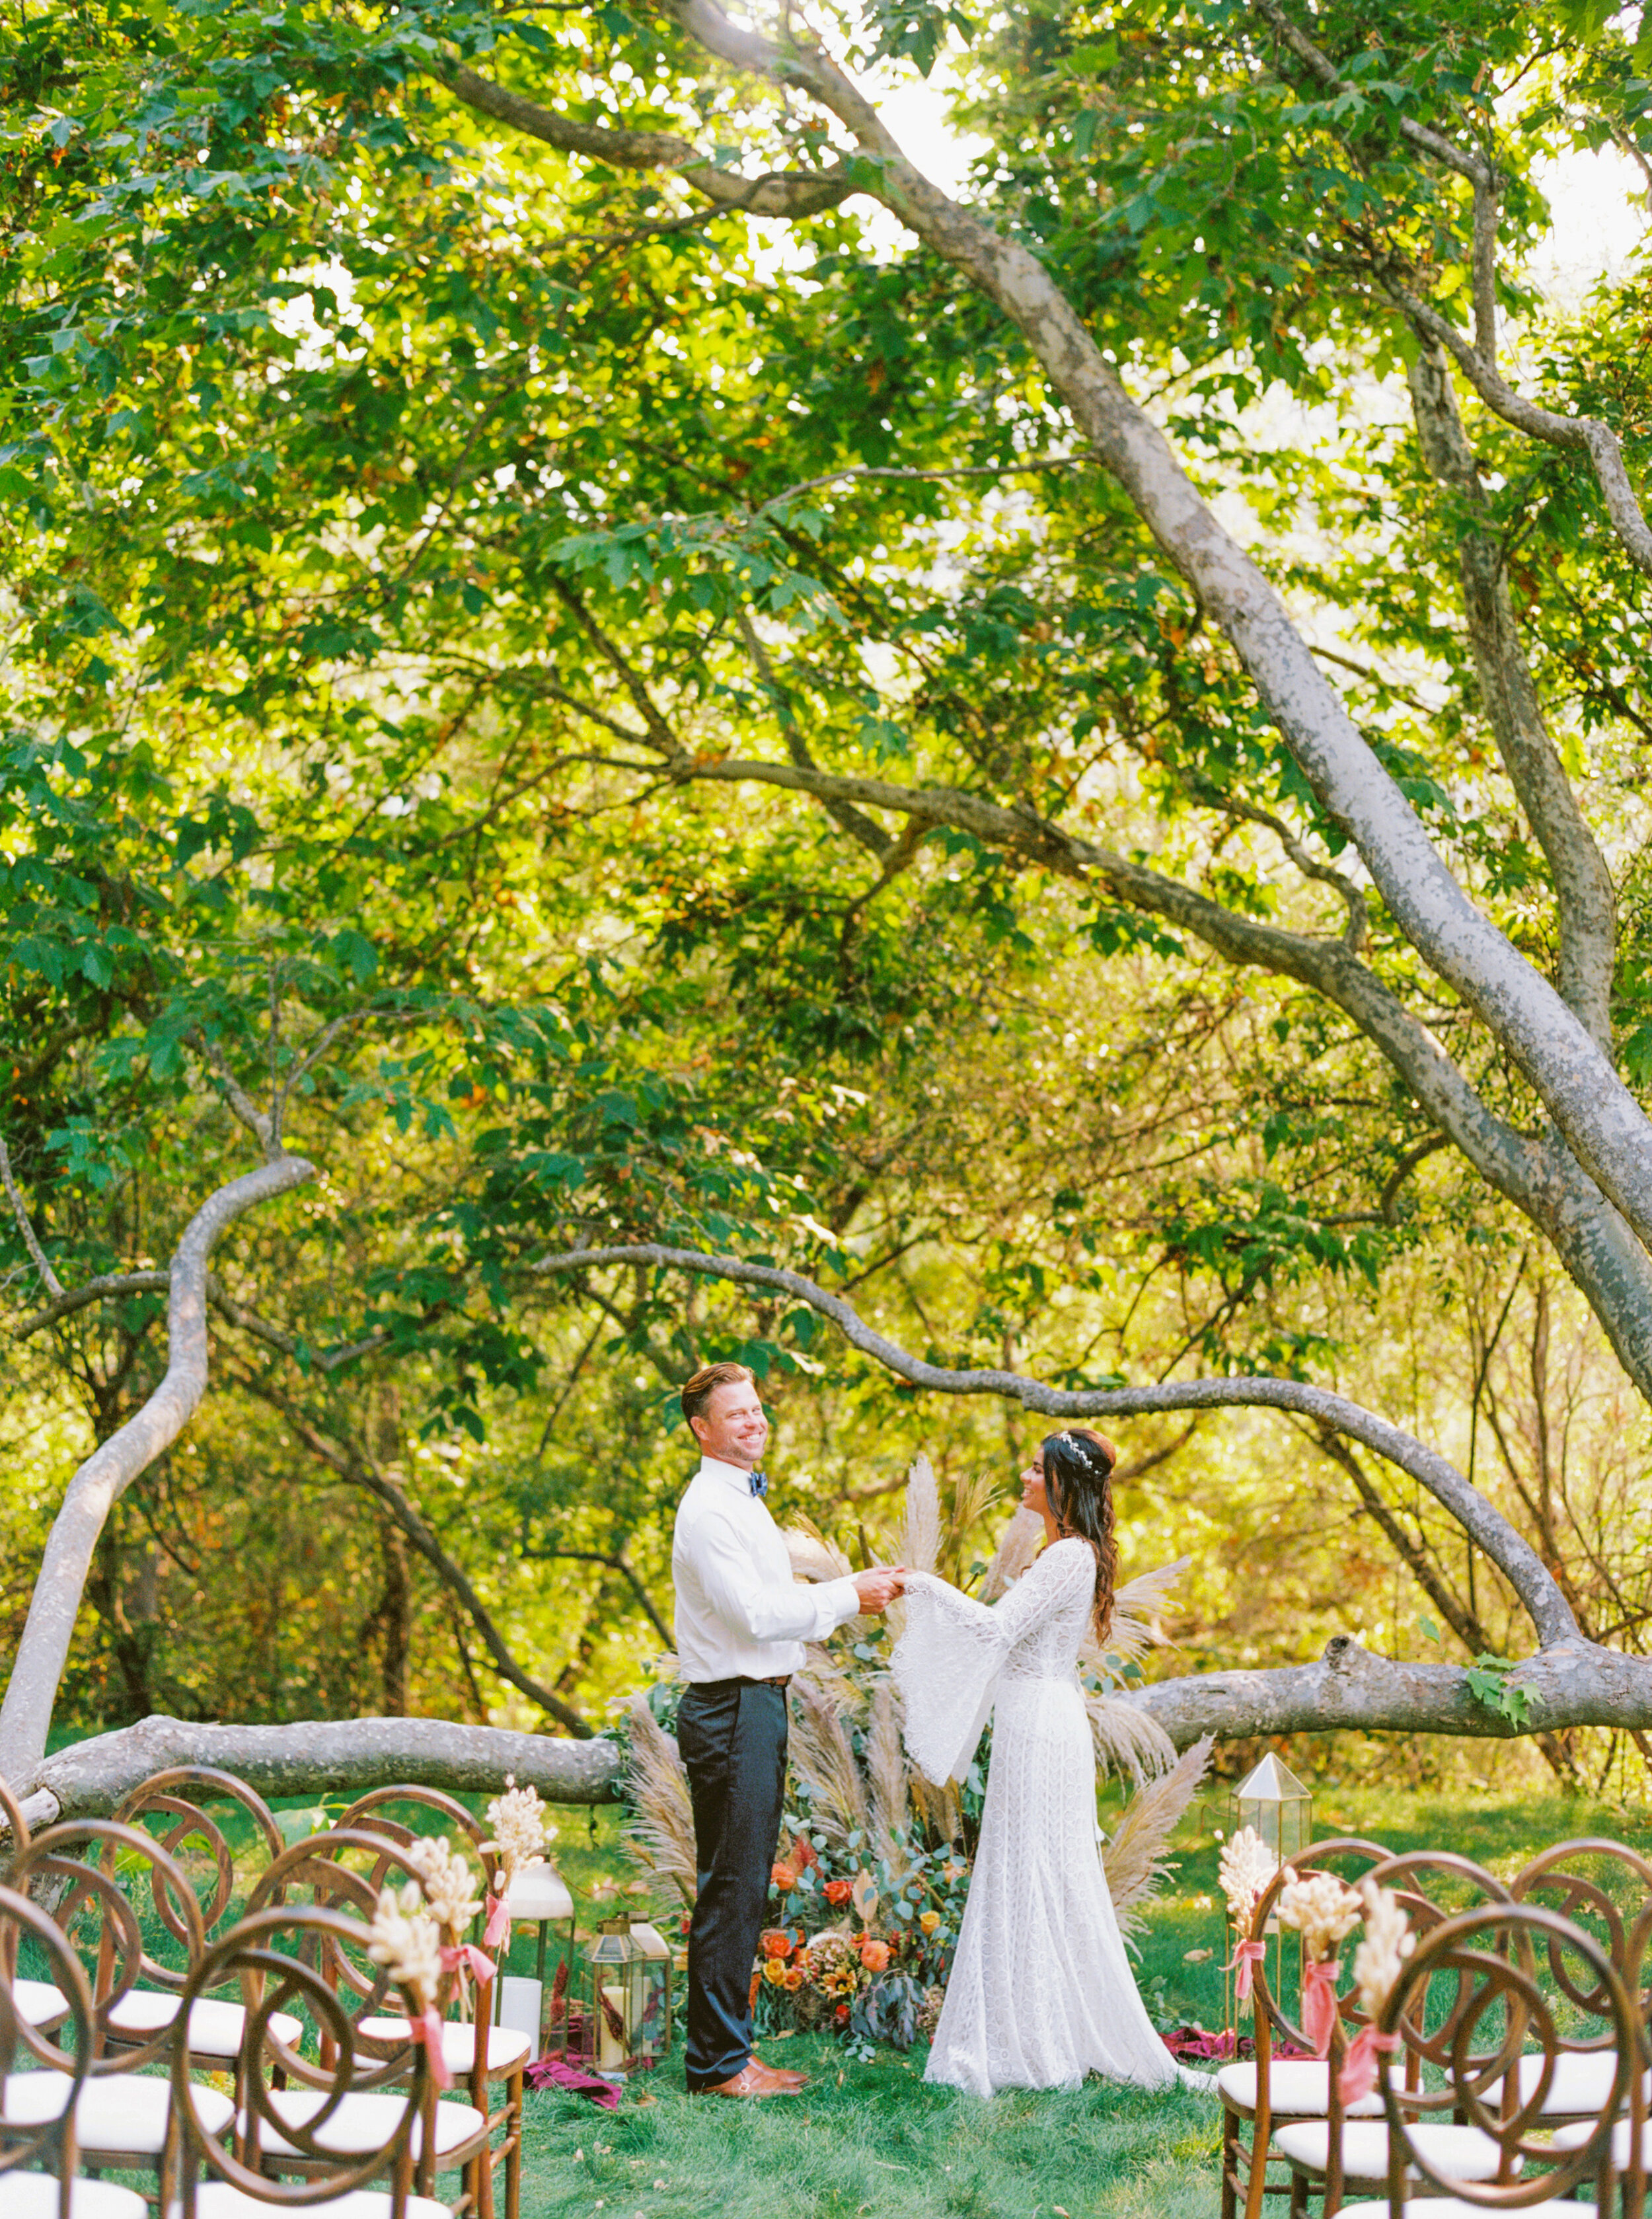 Sarahi Hadden - An Earthy Summer Boho Inspired Wedding with Sunset Hues at Gardener Ranch-135.jpg